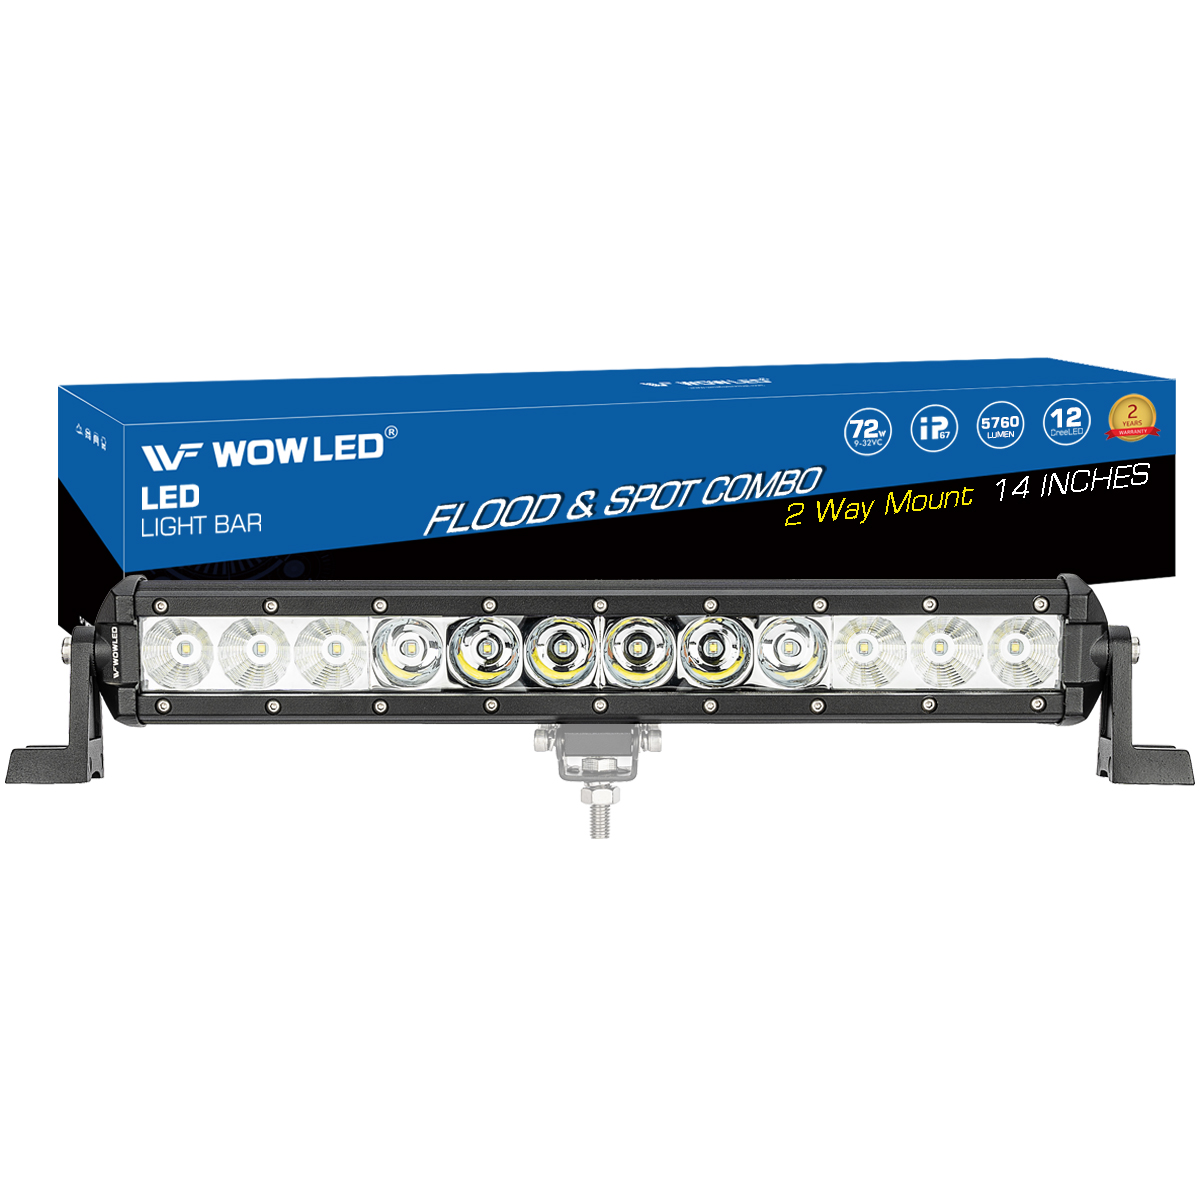 LED Light Bar – Wow Factor Information Ltd.